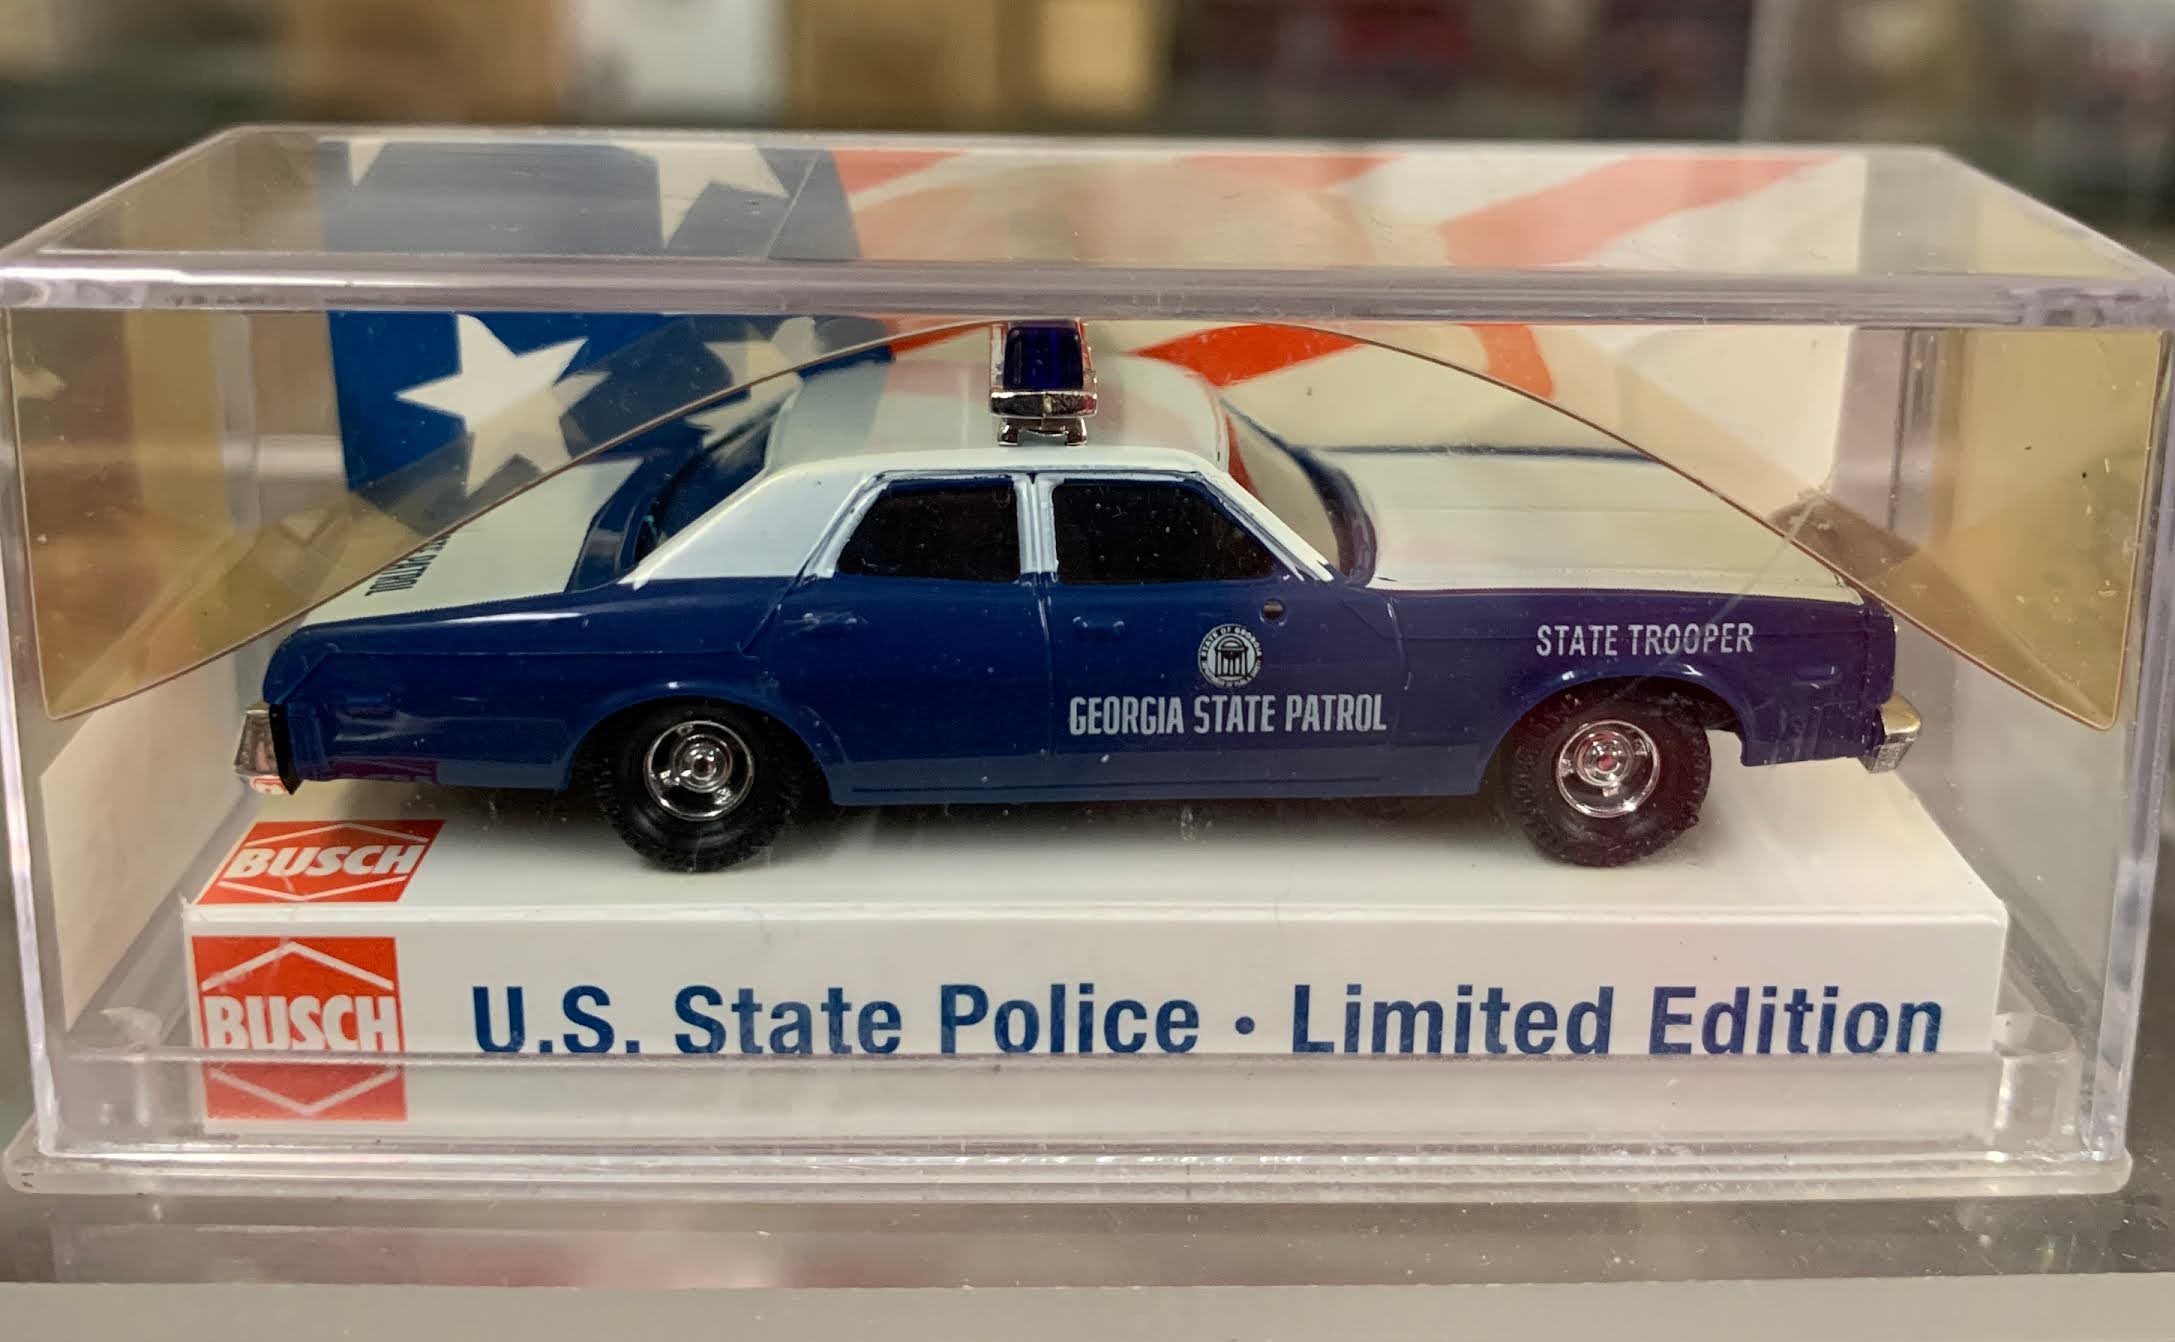 U.S. State Police Series - Georgia